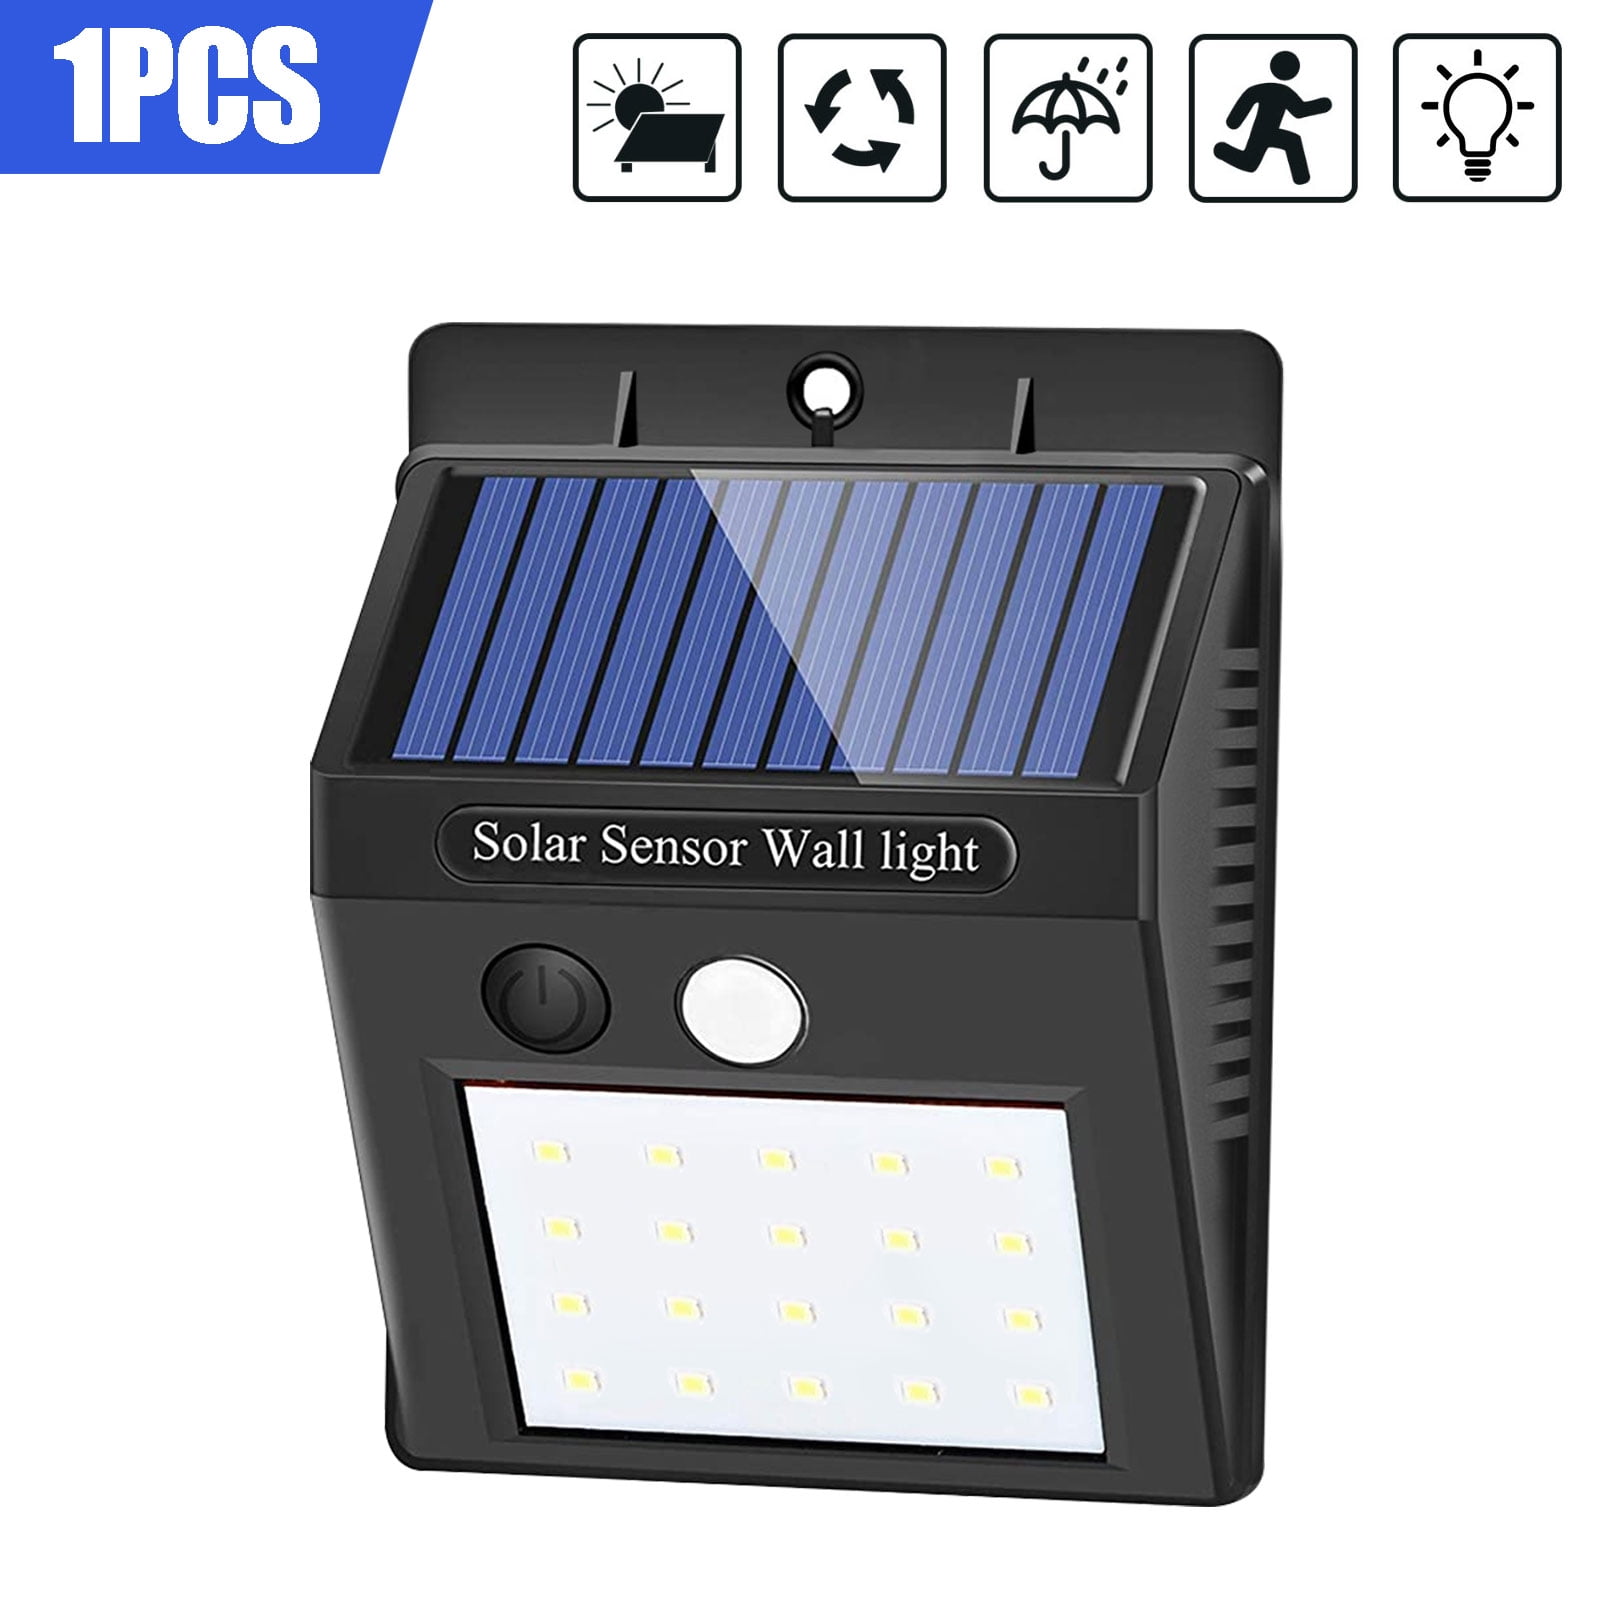 1-14PCS 20LED Solar Power PIR Motion Sensor Wall Light Outdoor Garden Patio Lamp 